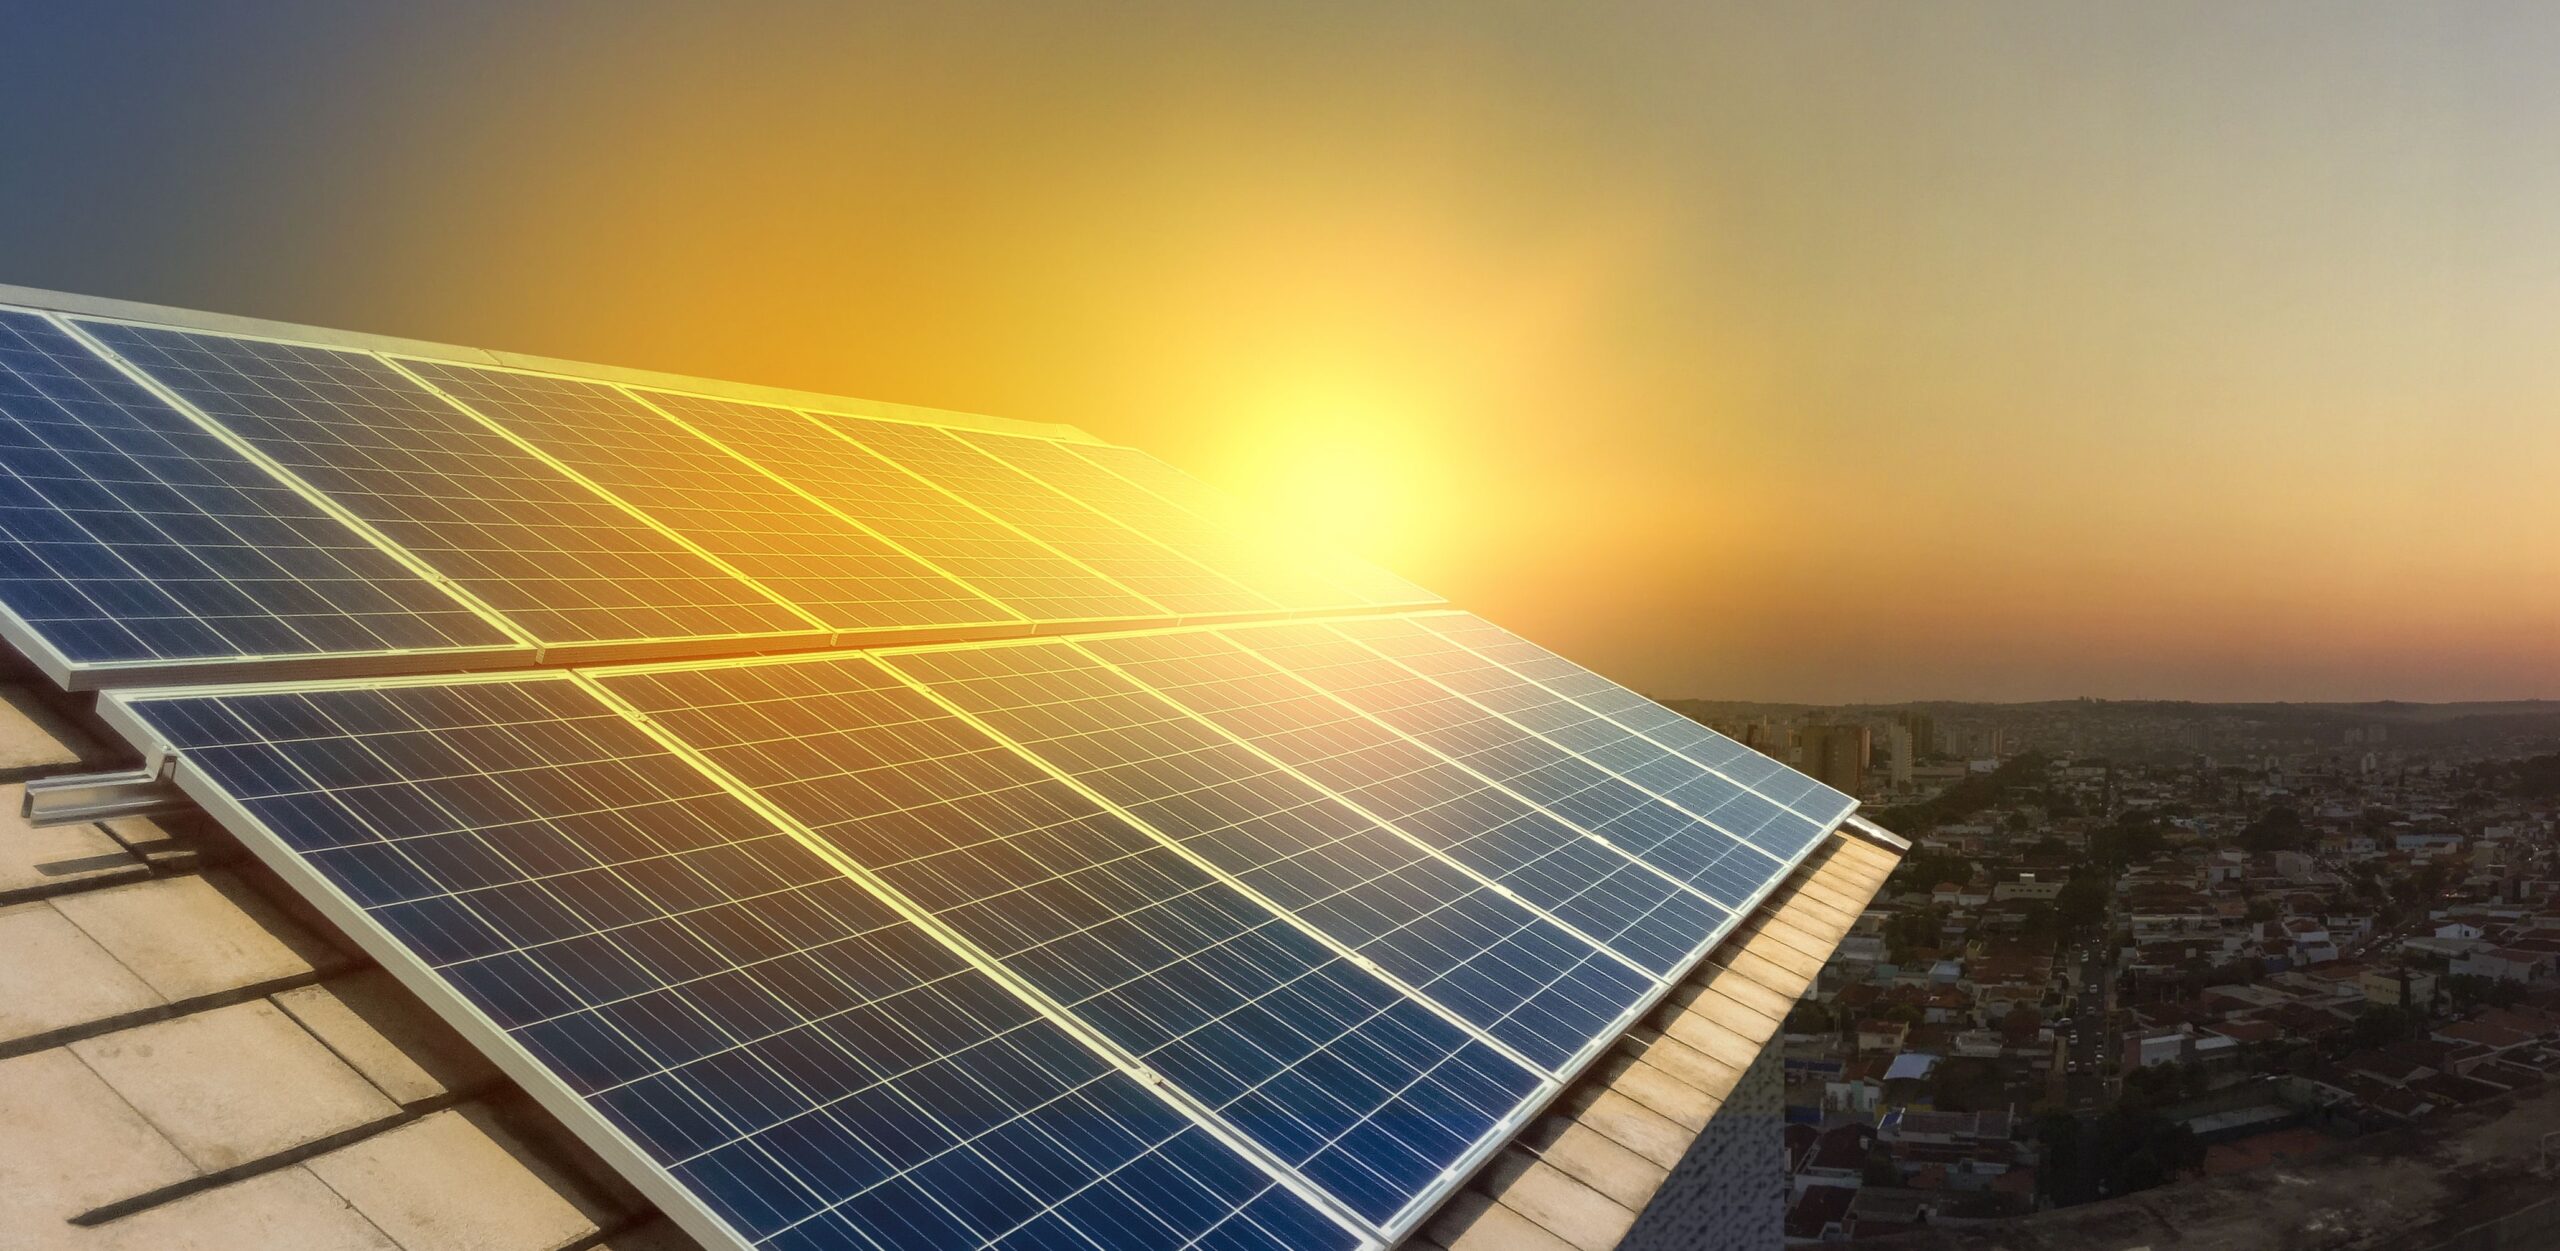 Solar Energy & Solar Panels Leads #8 - damianmartinez.com